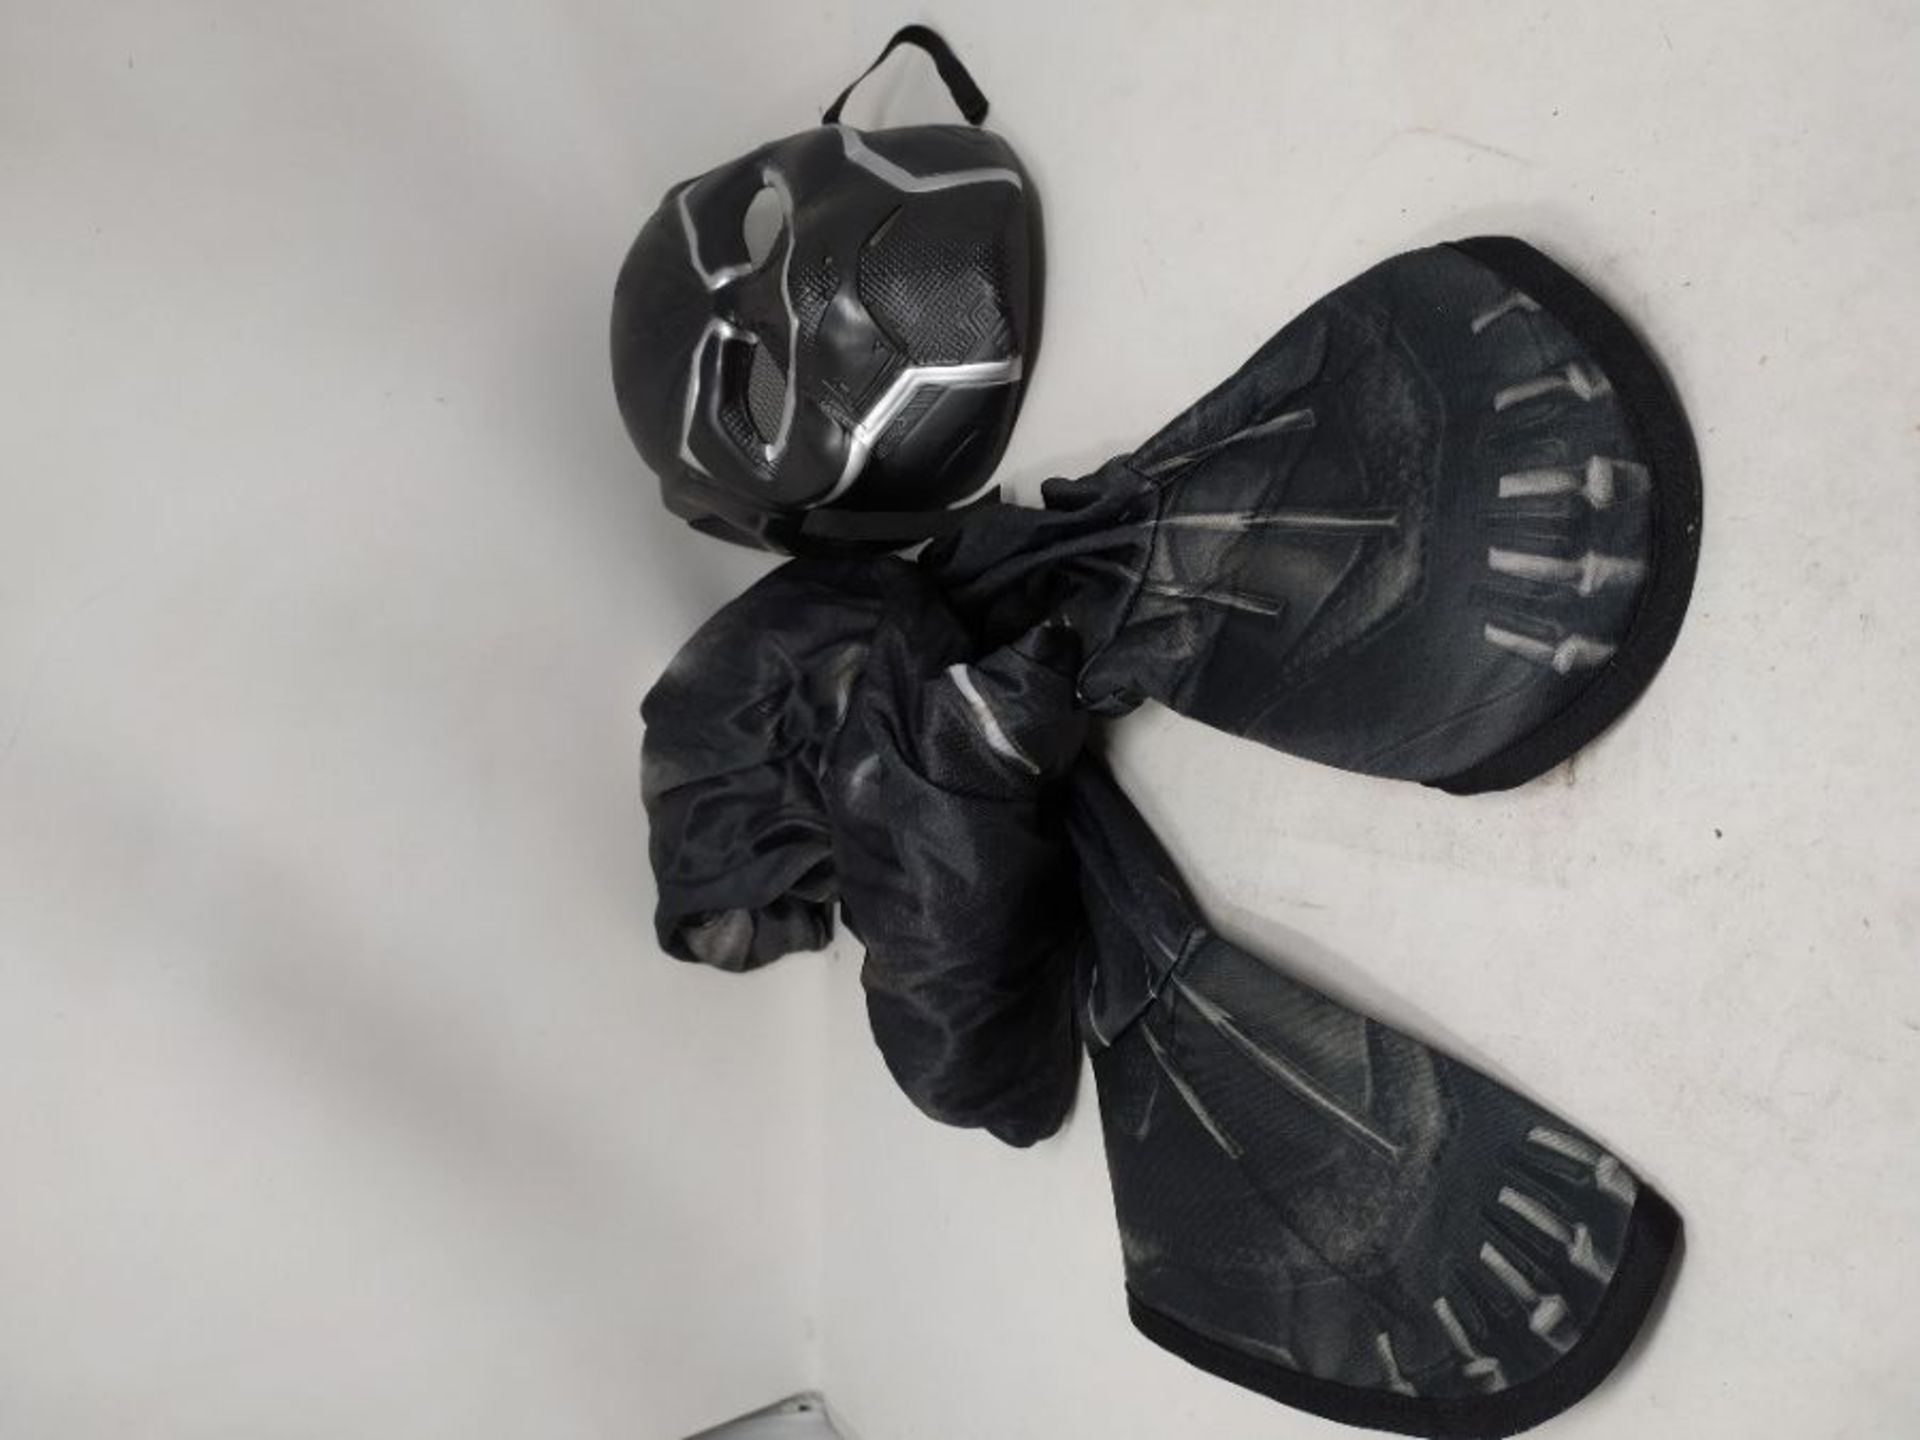 Avengers Black panther costume for children,Black, Medium - Image 2 of 3